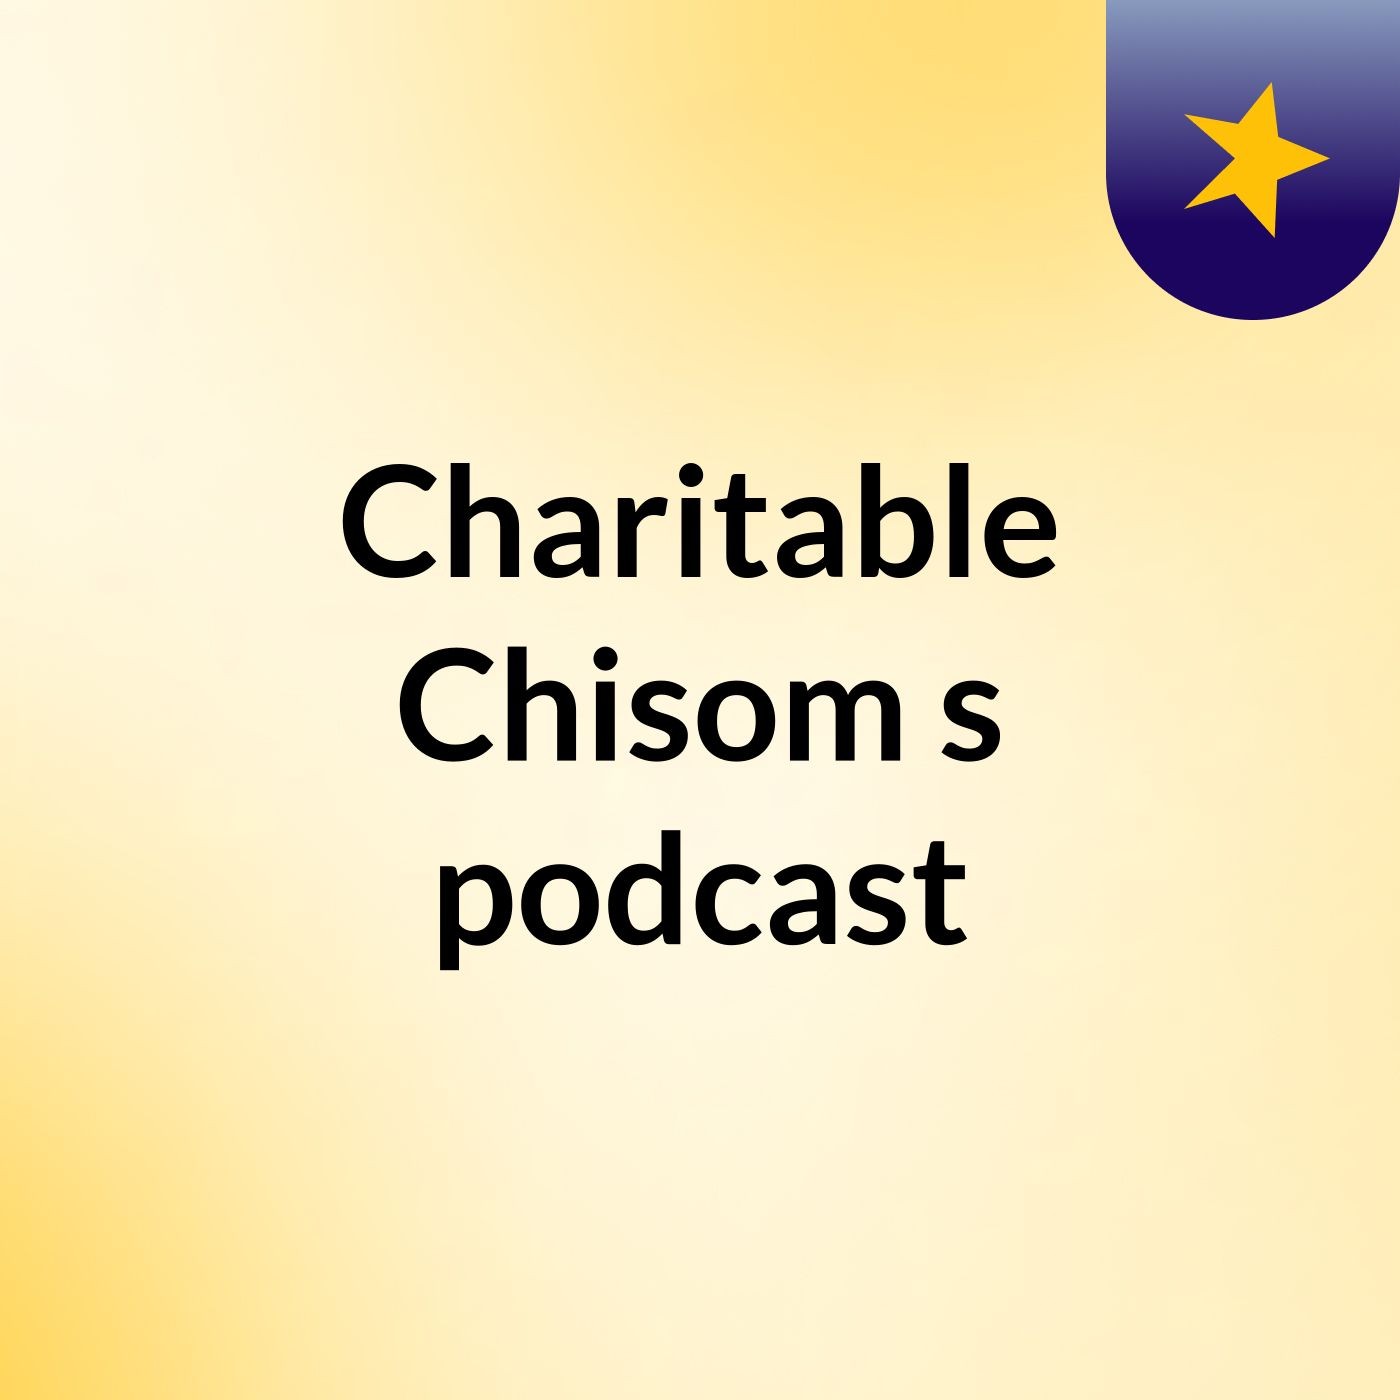 Charitable Chisom's podcast